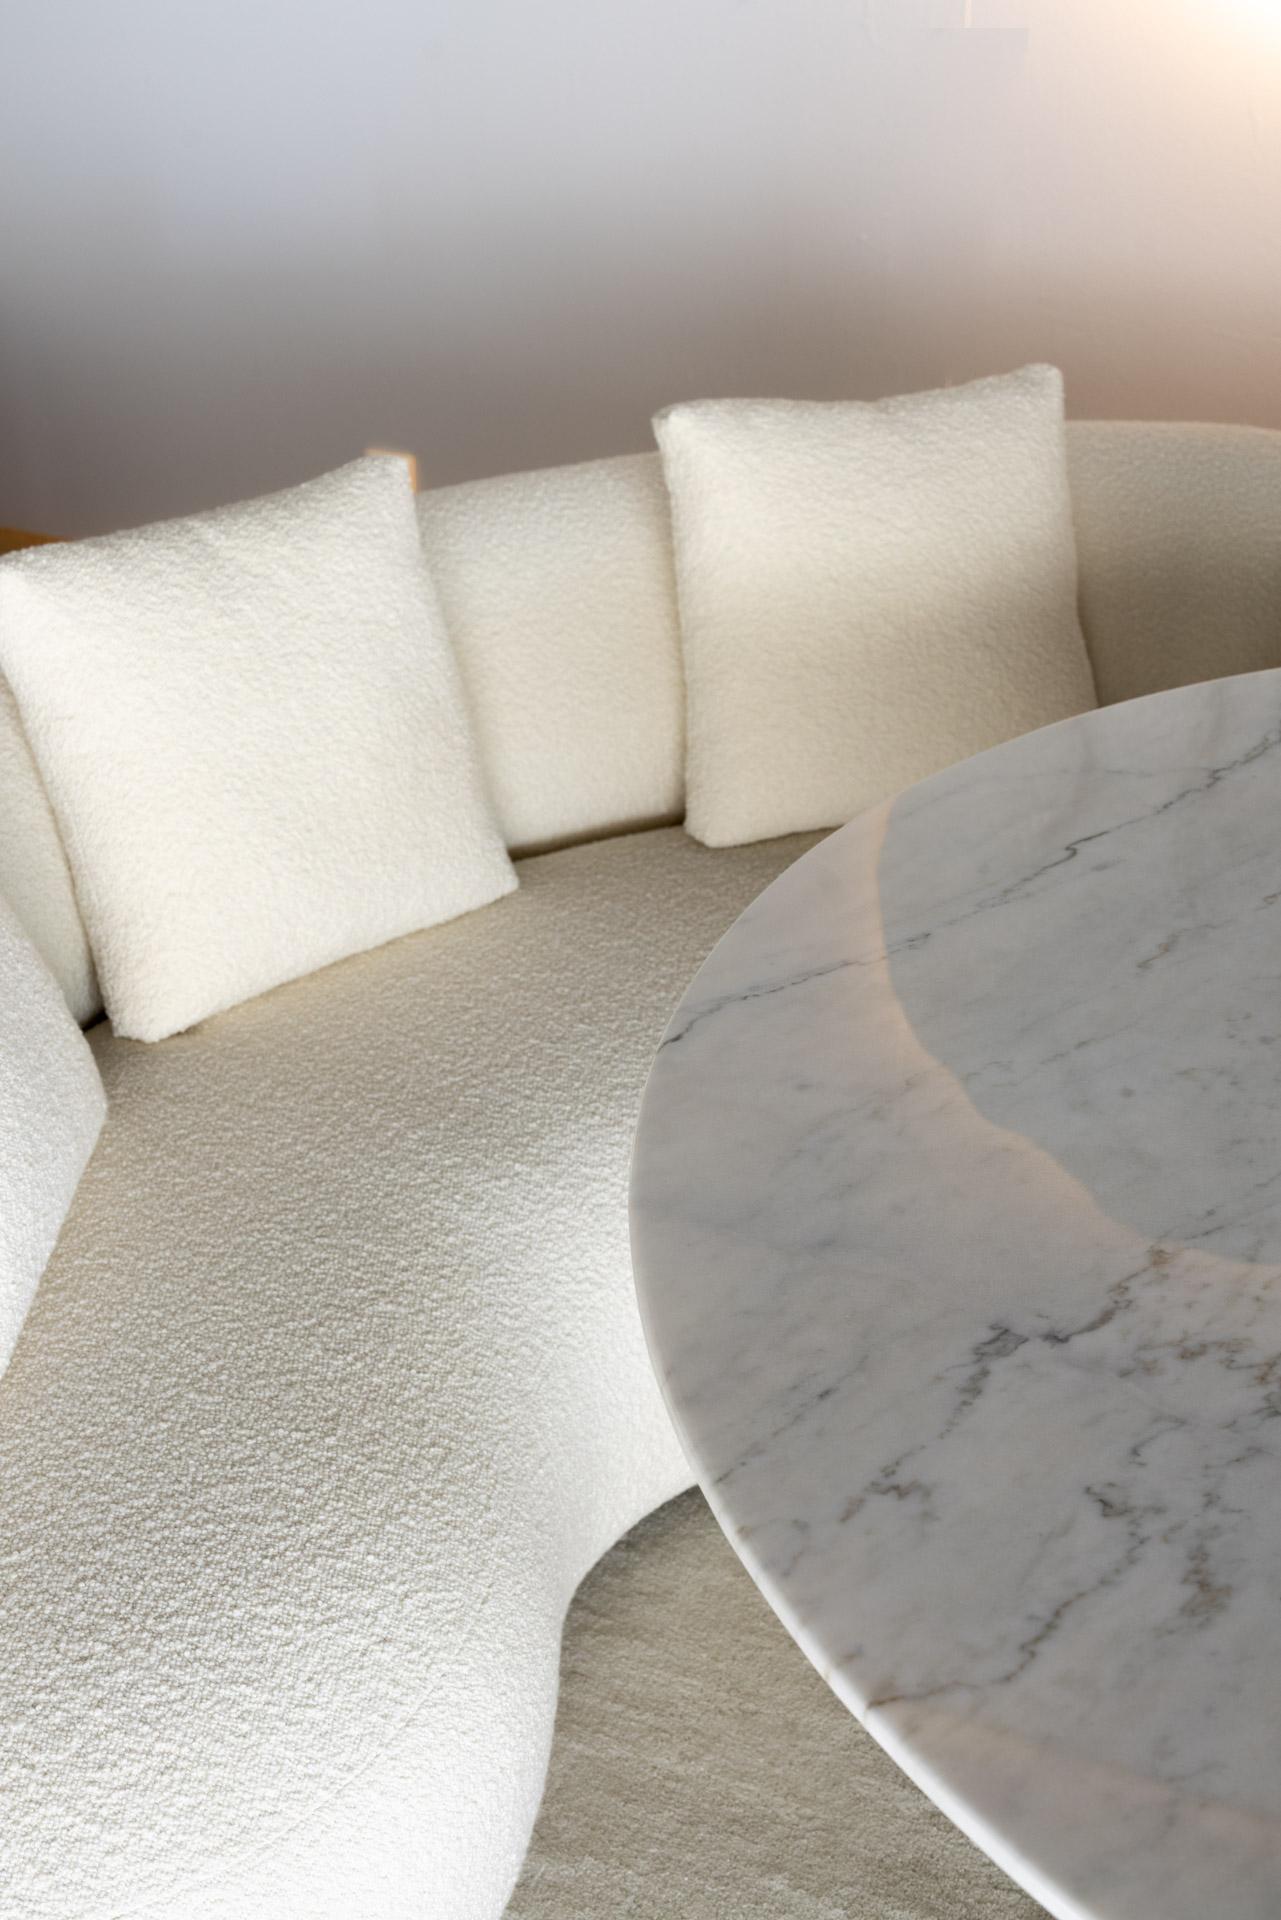 Organic Modern Twins Curved Sofa, White Bouclé, Handmade Portugal by Greenapple For Sale 2